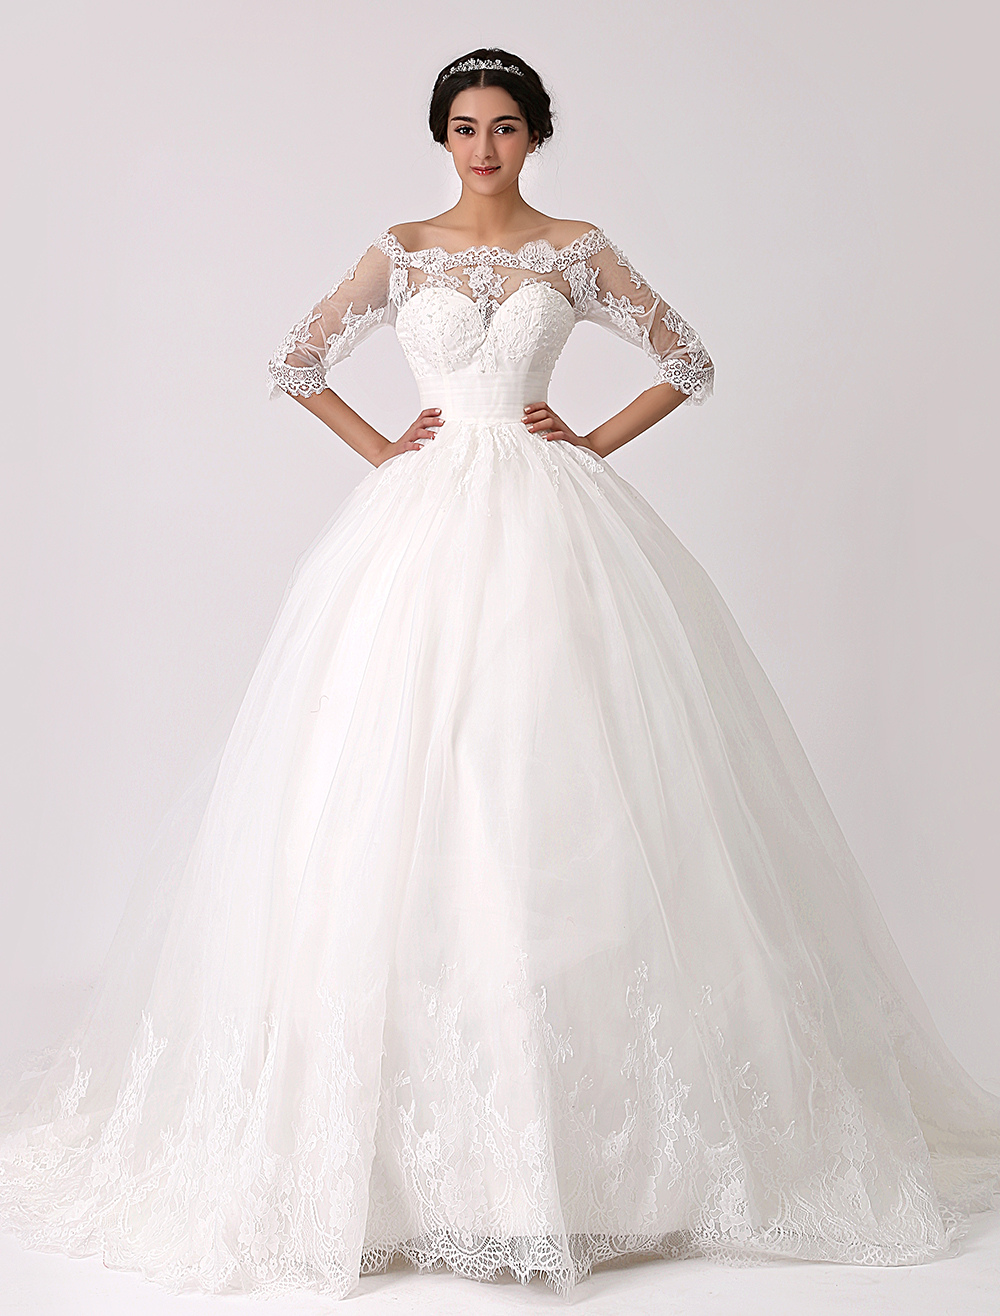 Off The Shoulder Princess Lace Wedding Dress With Illusion Neckline Milanoo 